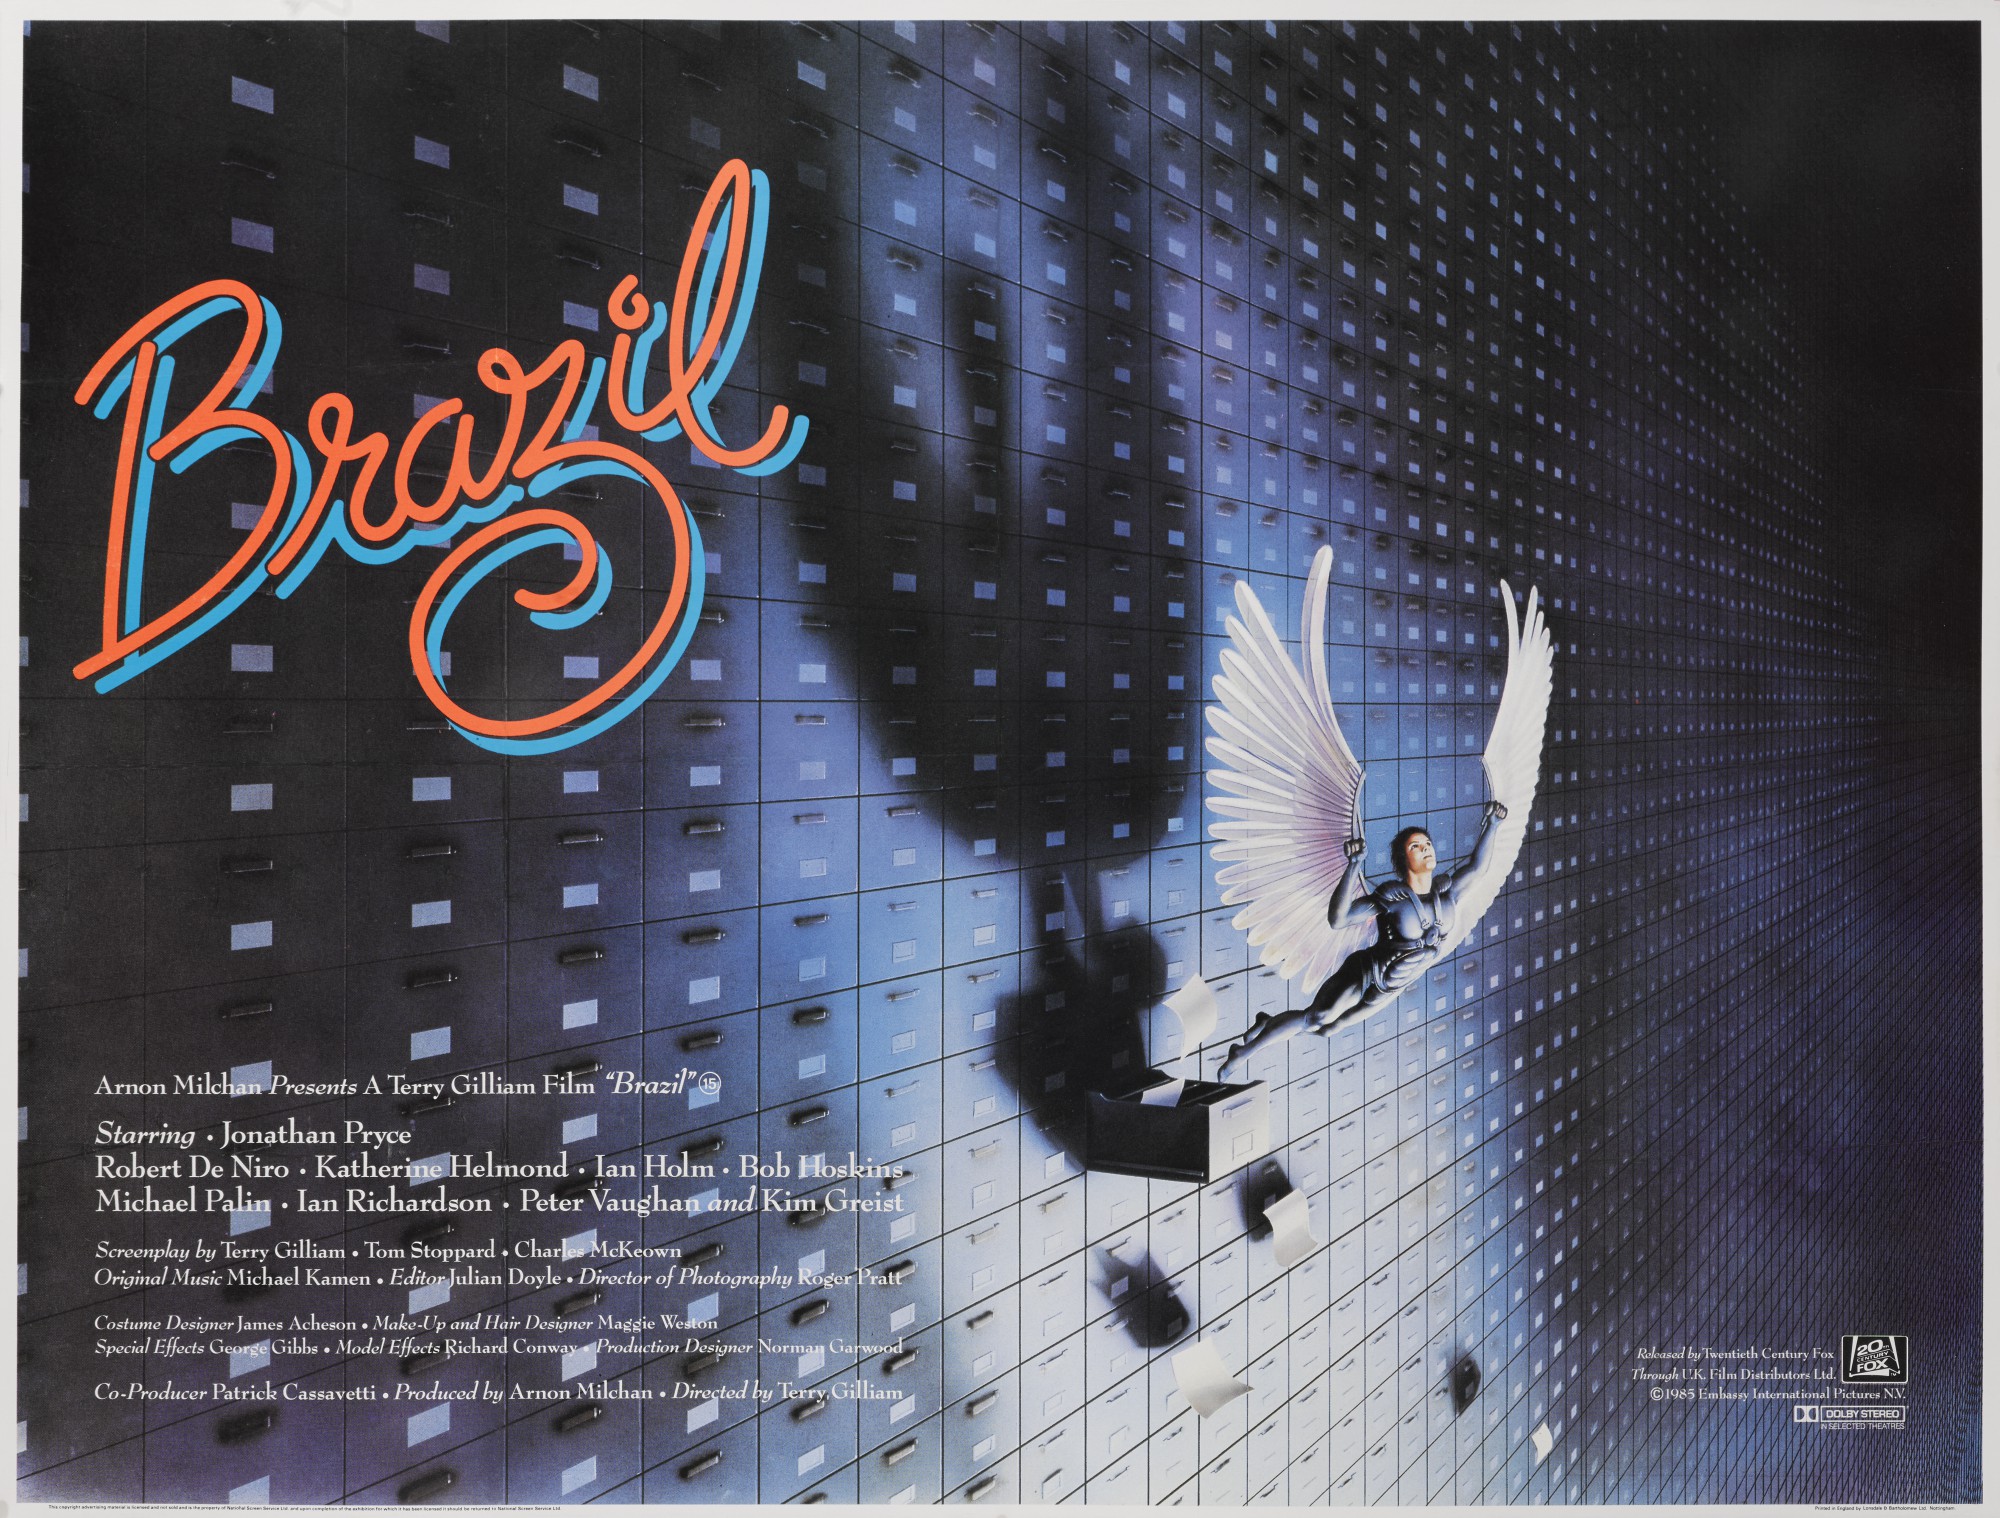 BRAZIL (1985) POSTER, BRITISH. Original Film Posters Online